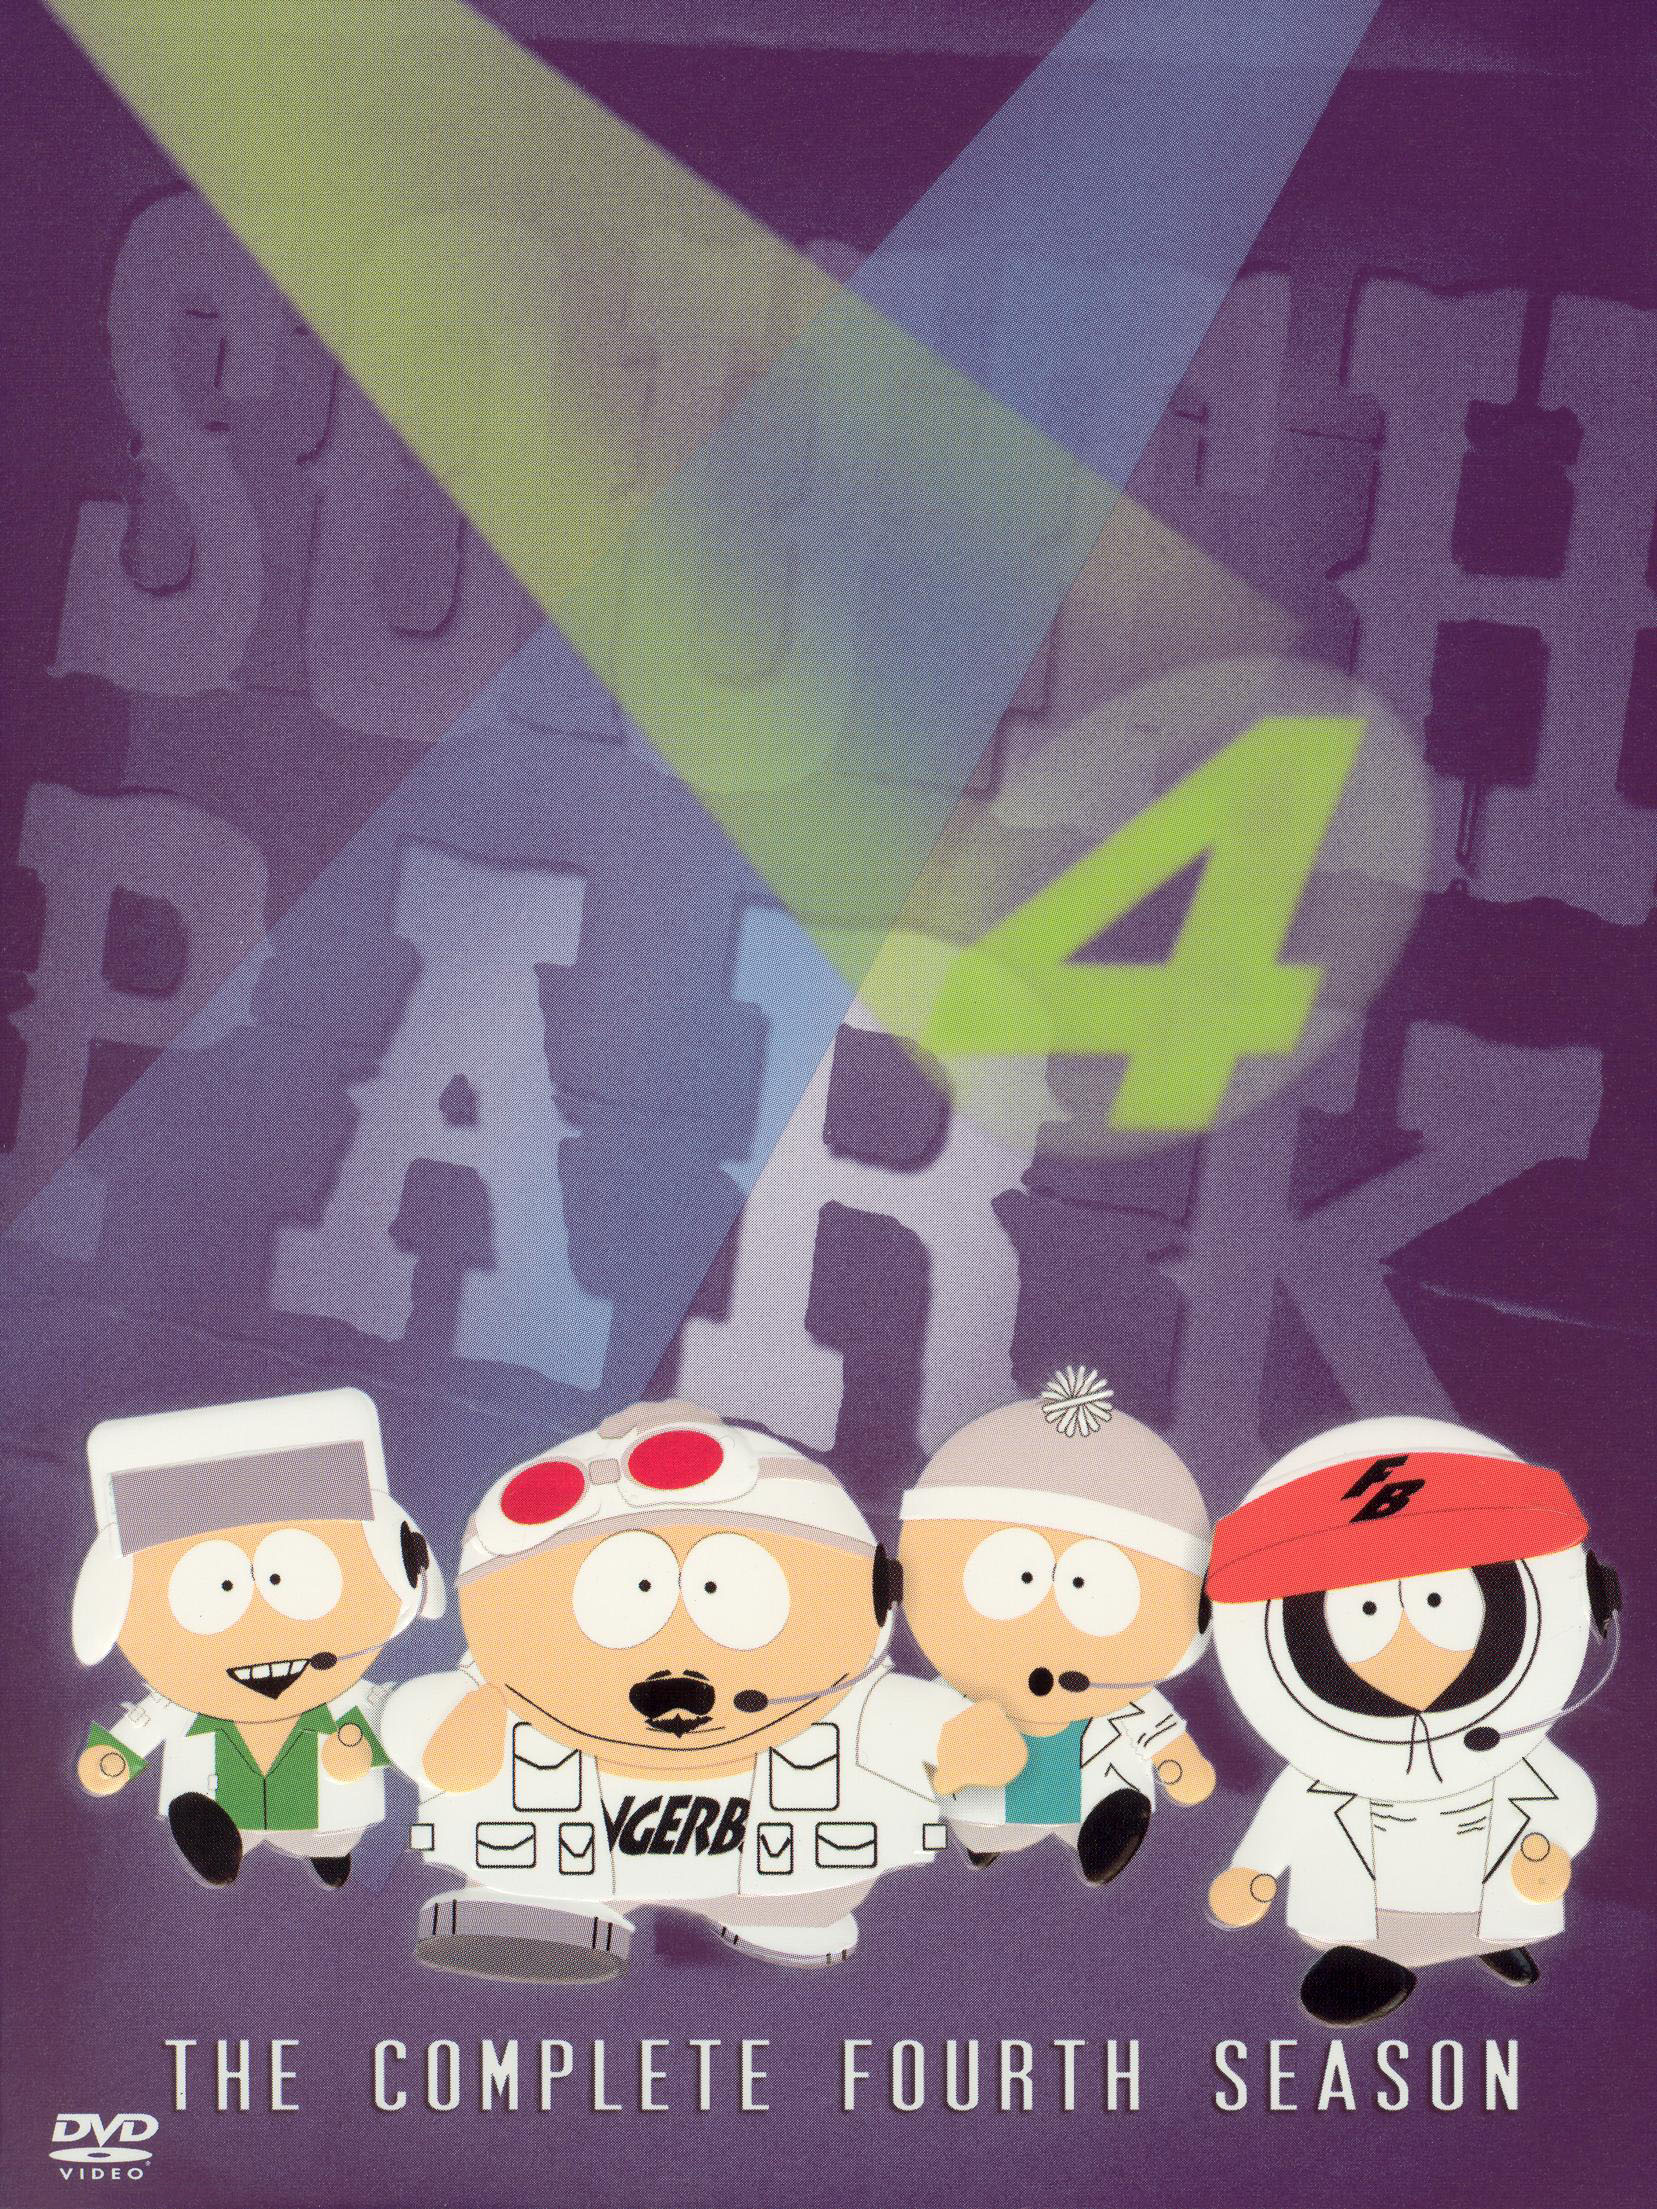  South Park: The Streaming Wars [Blu-ray] : Matt Stone, Trey  Parker: Movies & TV